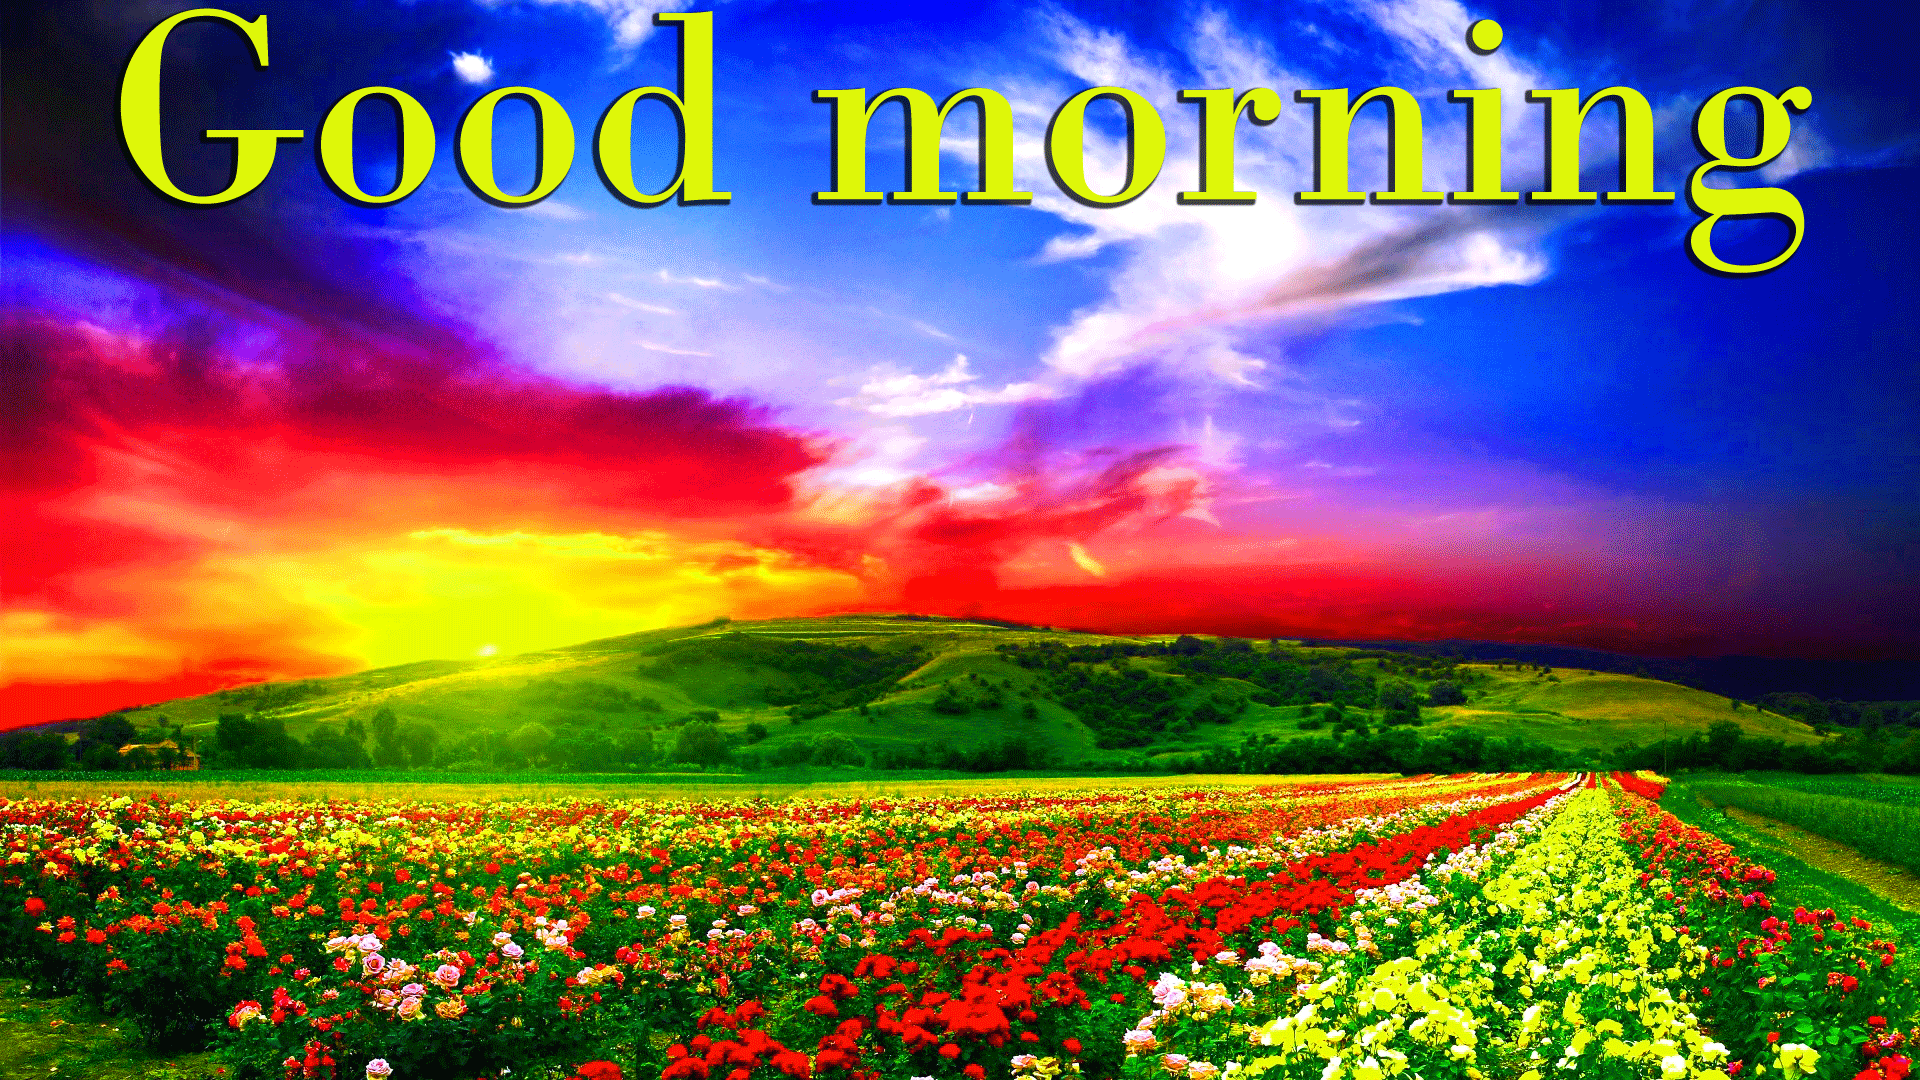 Good Morning Pics To Download. Good Morning Image, Good Morning Gif & Good Morning Wallpaper